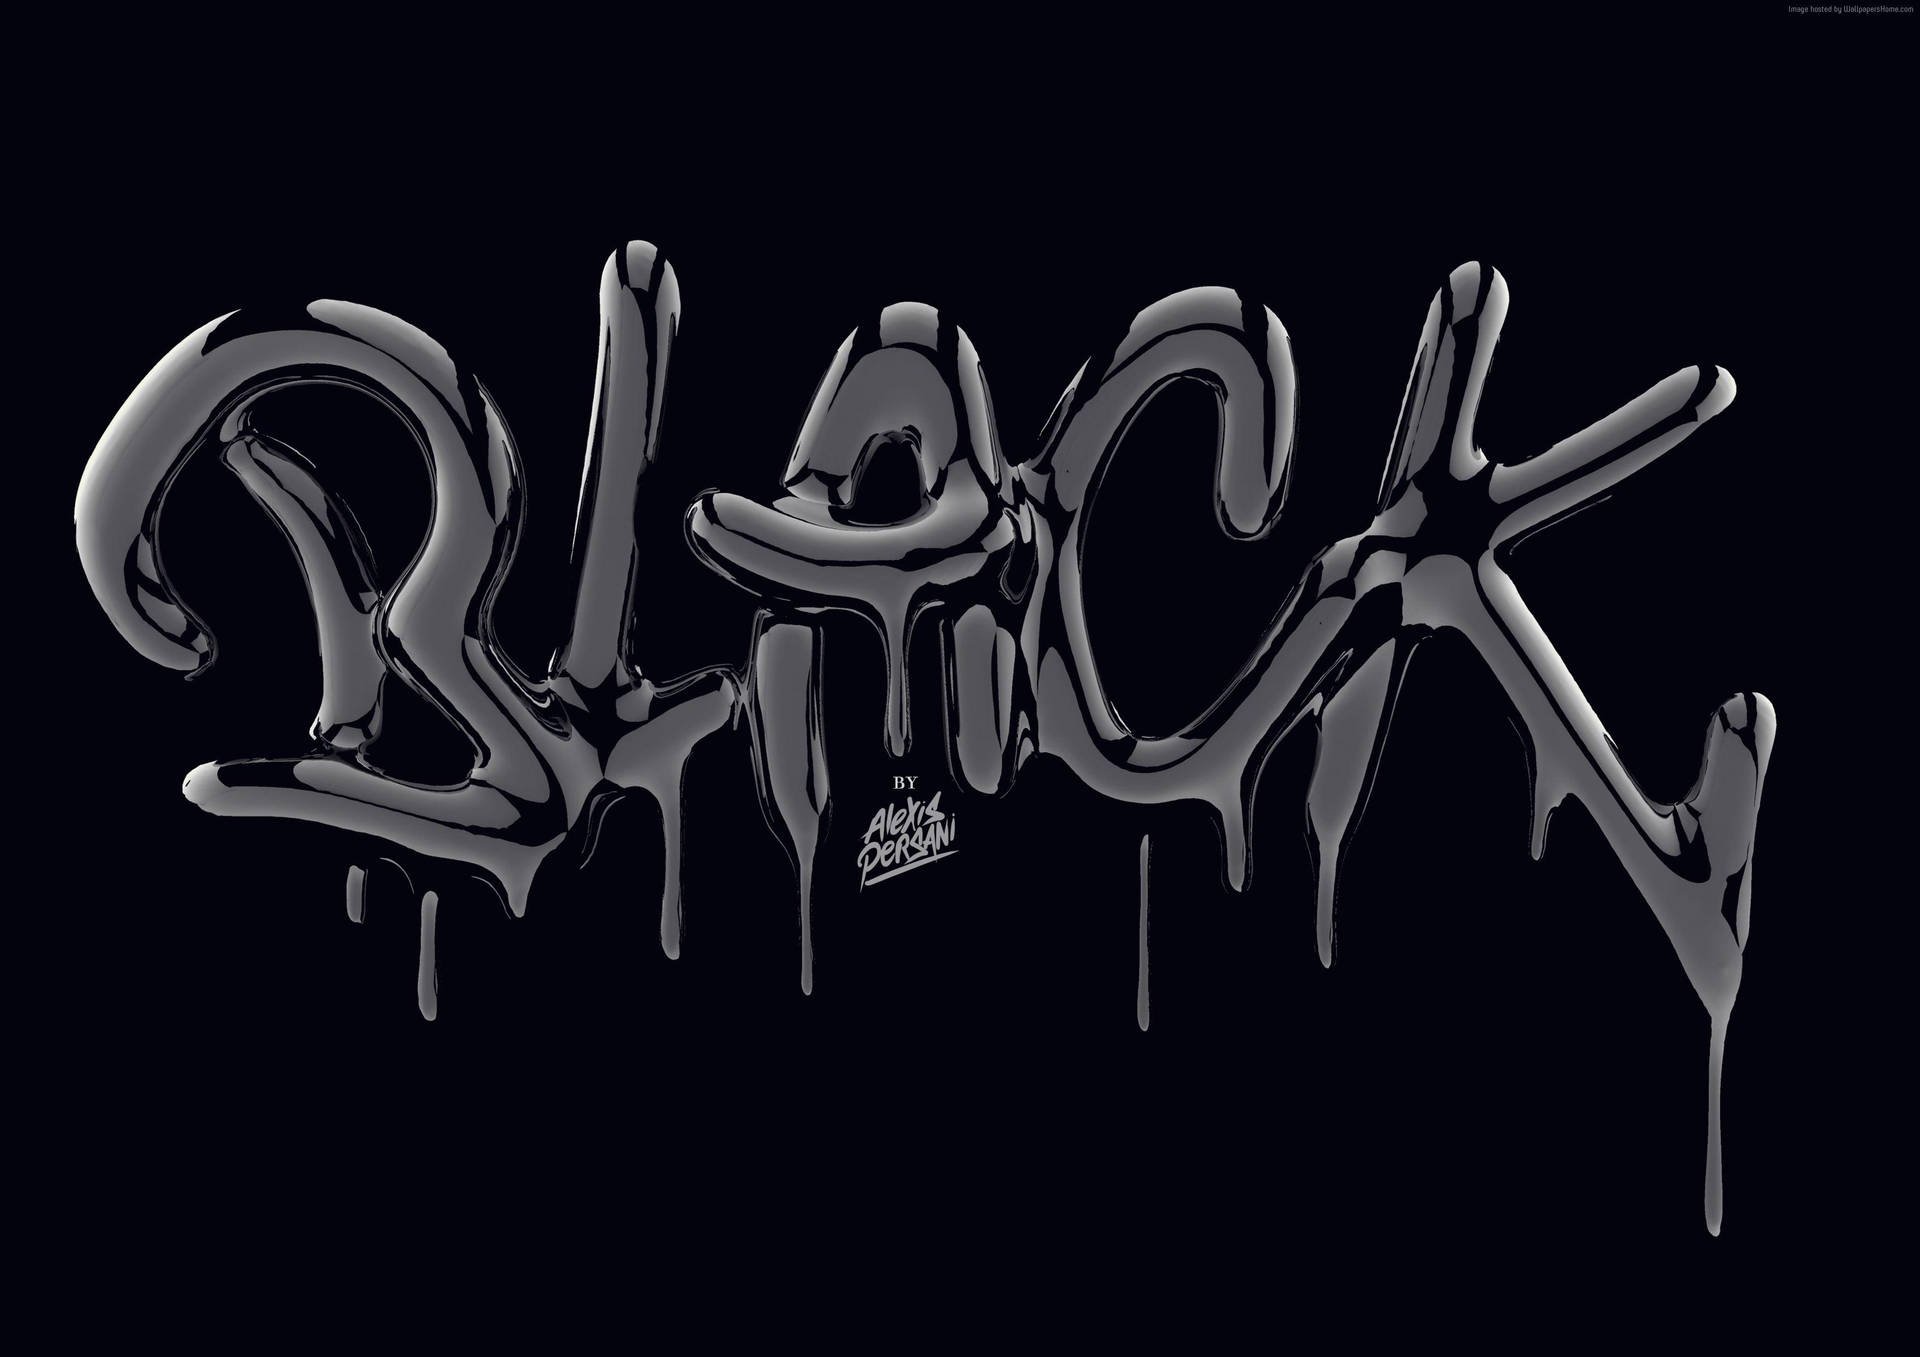 Free Black Drippy Wallpaper Downloads, Black Drippy Wallpaper for FREE